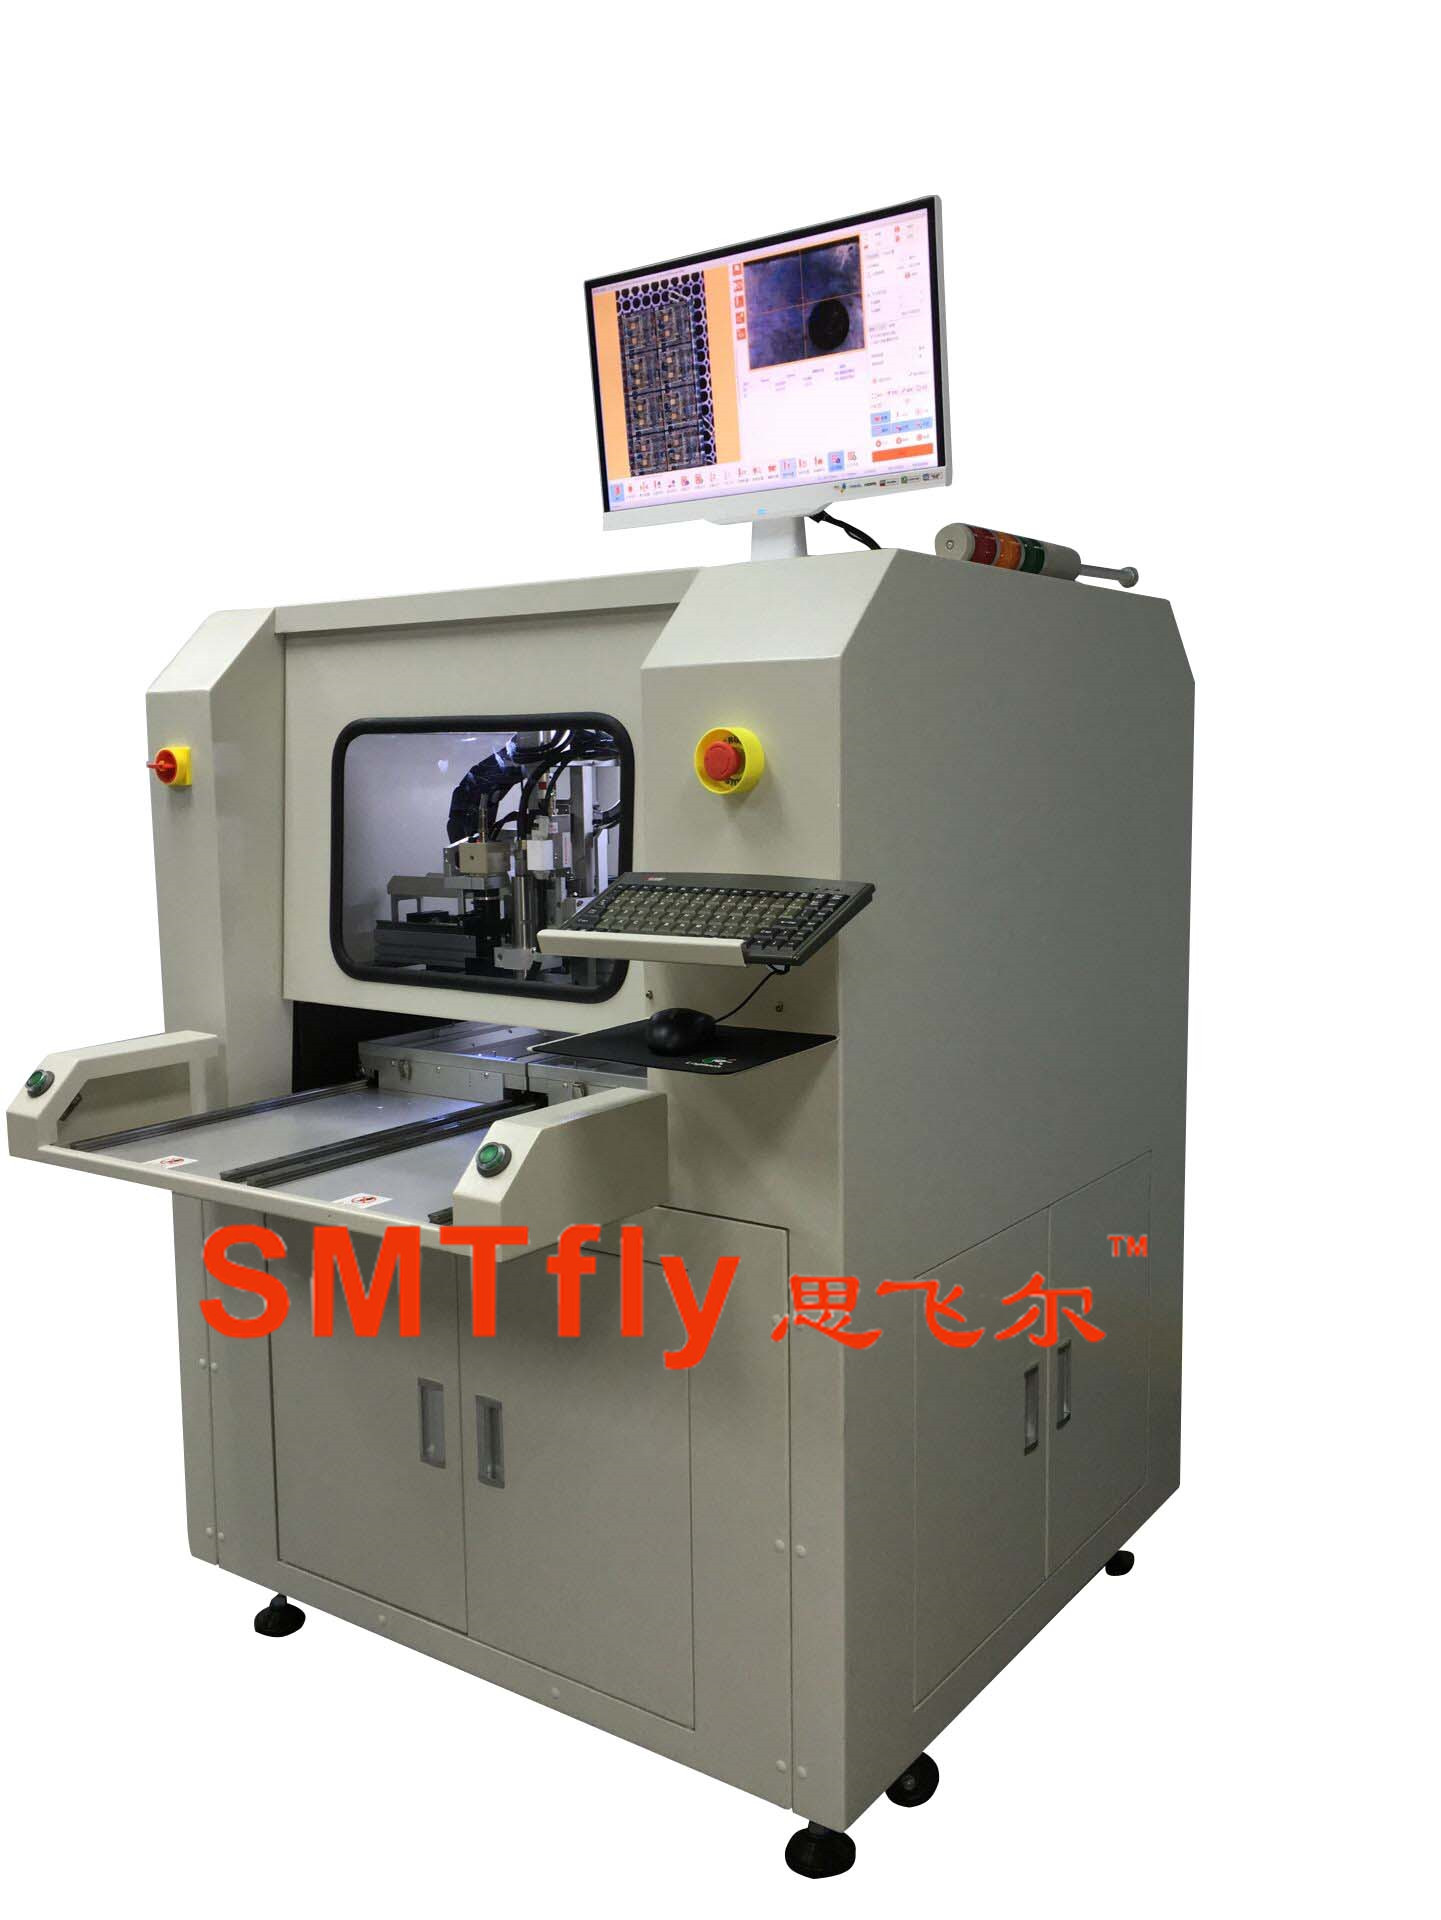 PCB drilling equipment, SMTfly-F02